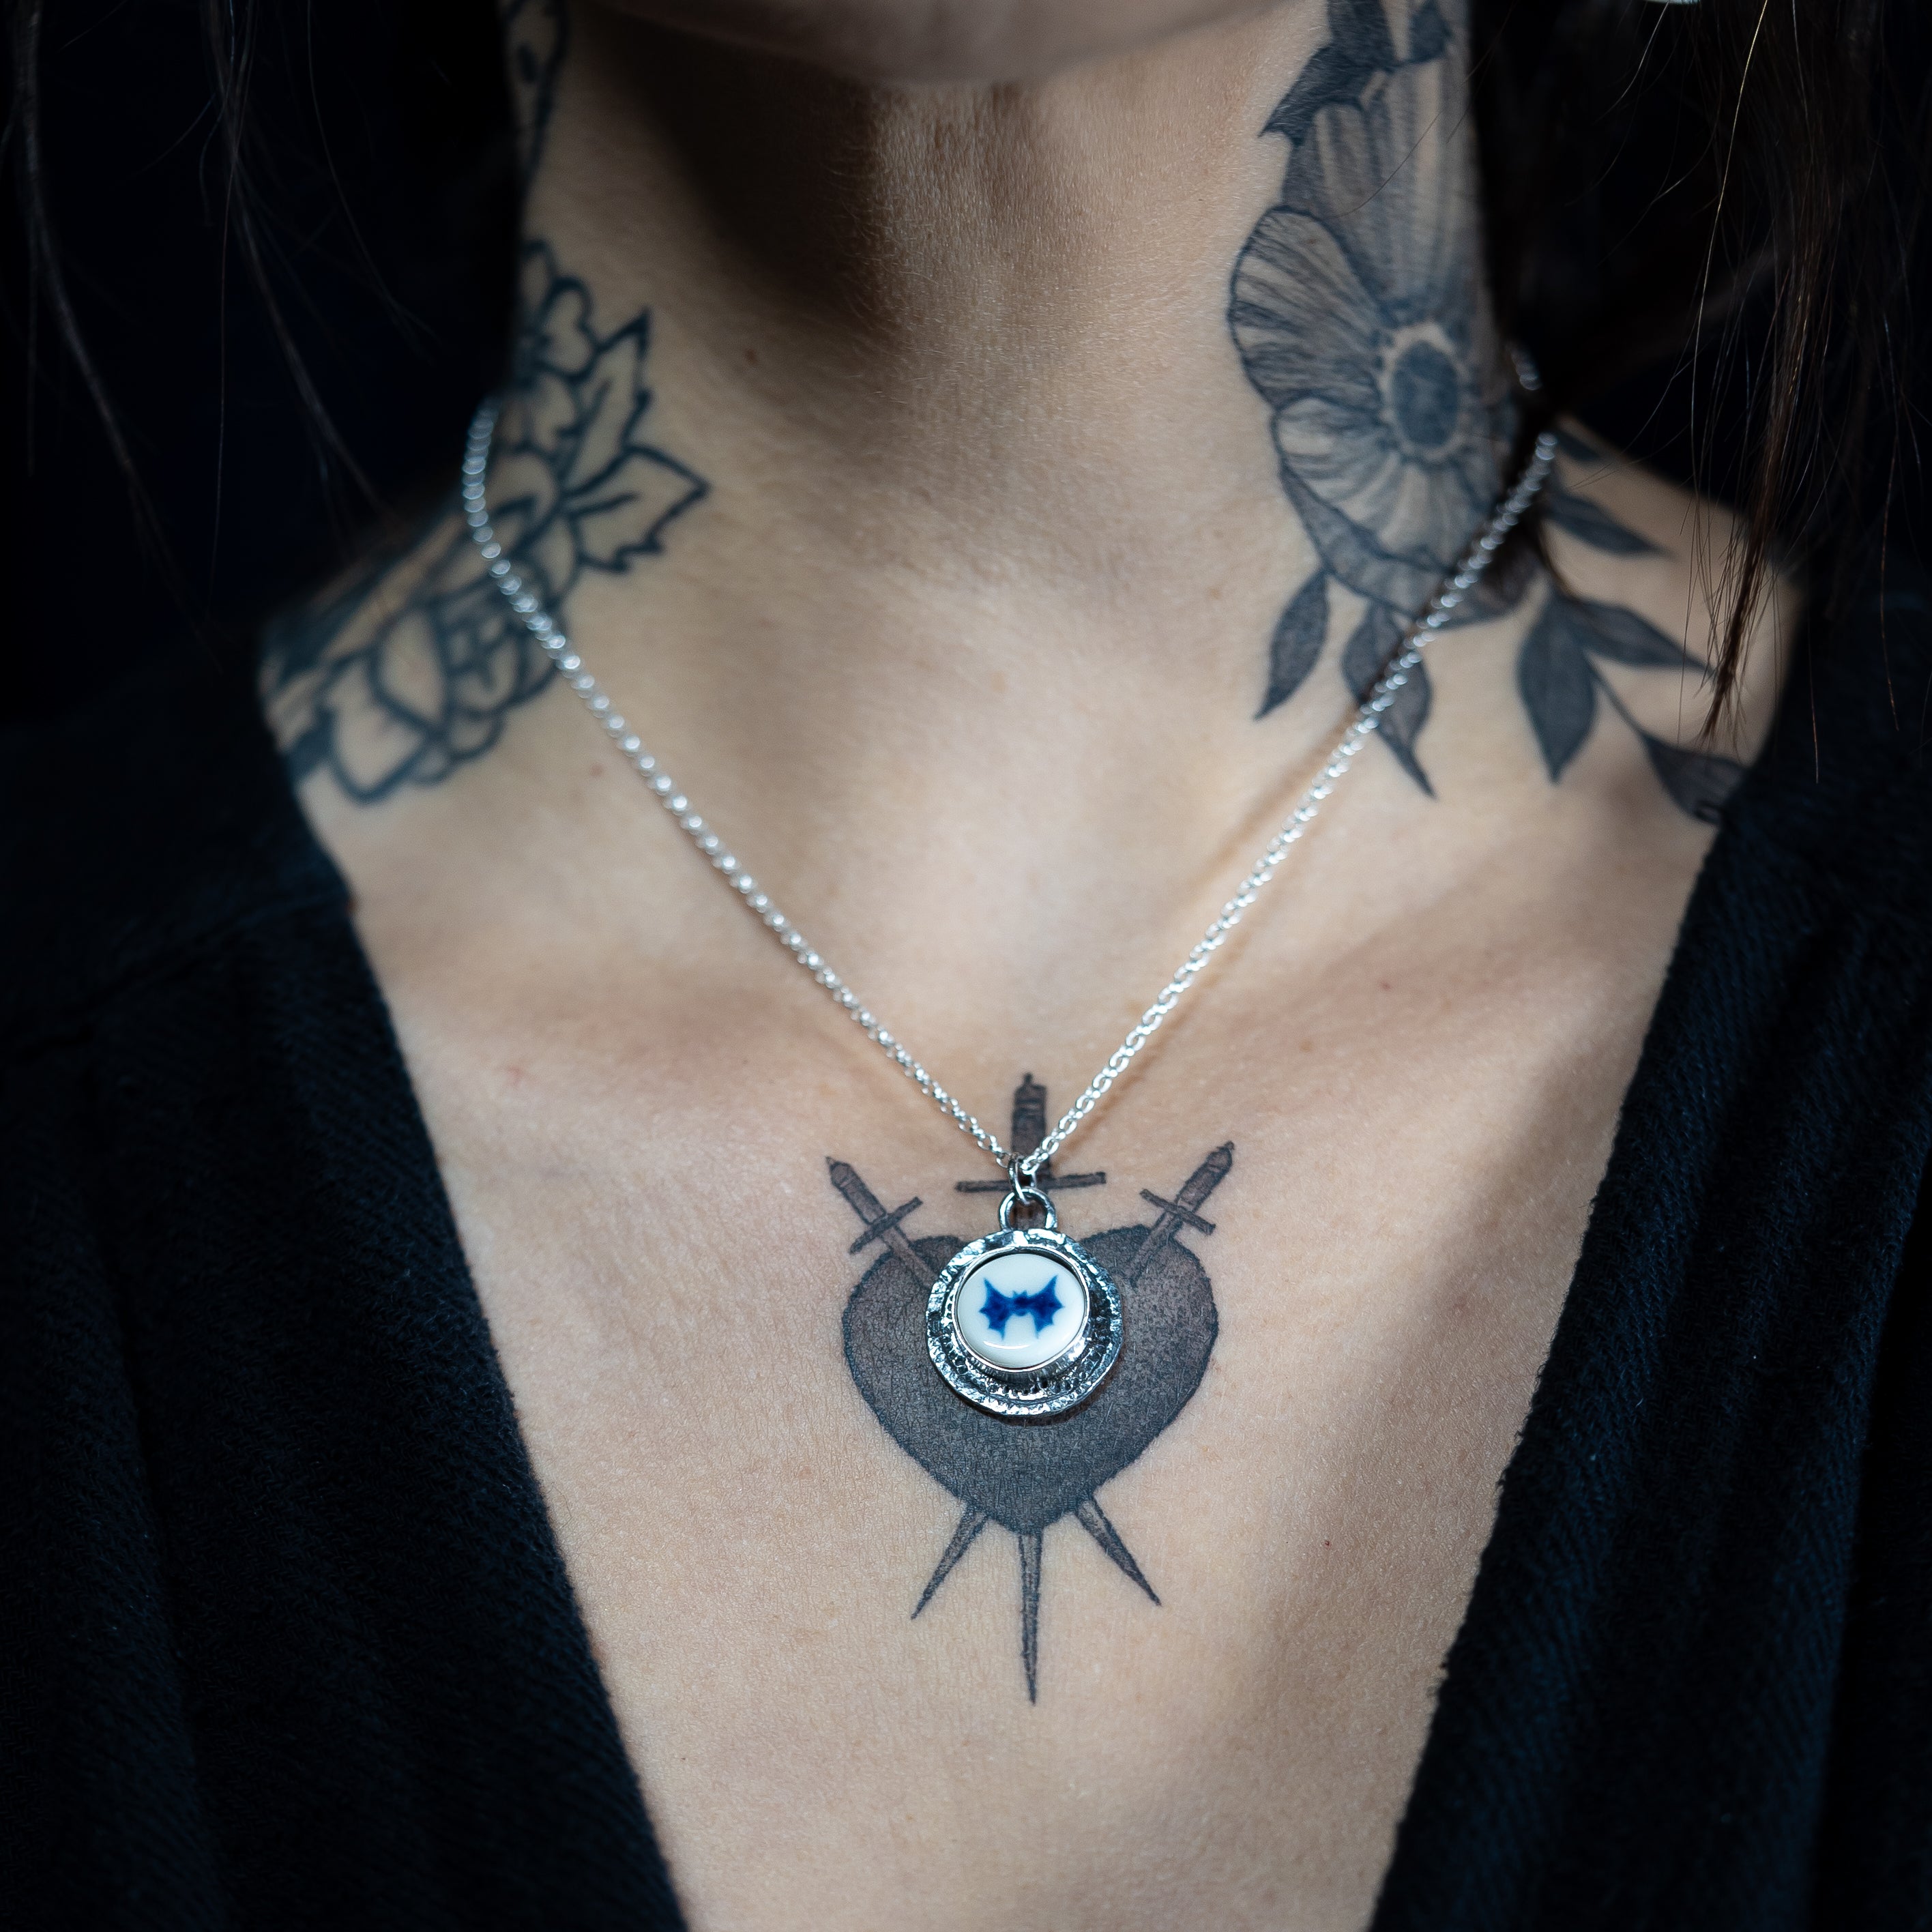 Alternative model with neck tattoos wearing a bat pendant